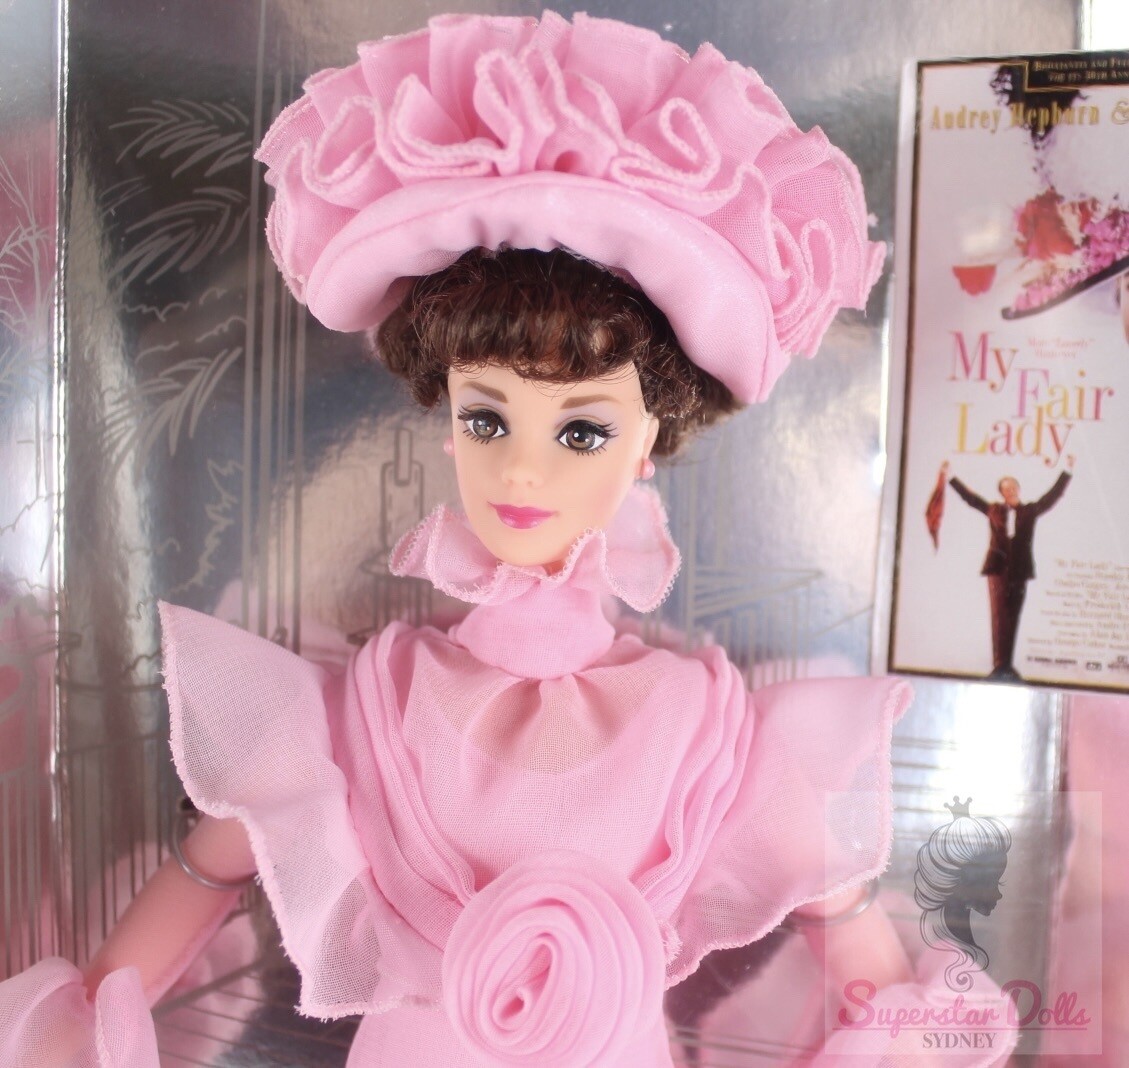 1995 Collector Edition: Barbie as Eliza Doolittle in My Fair Lady Audrey Hepburn Doll